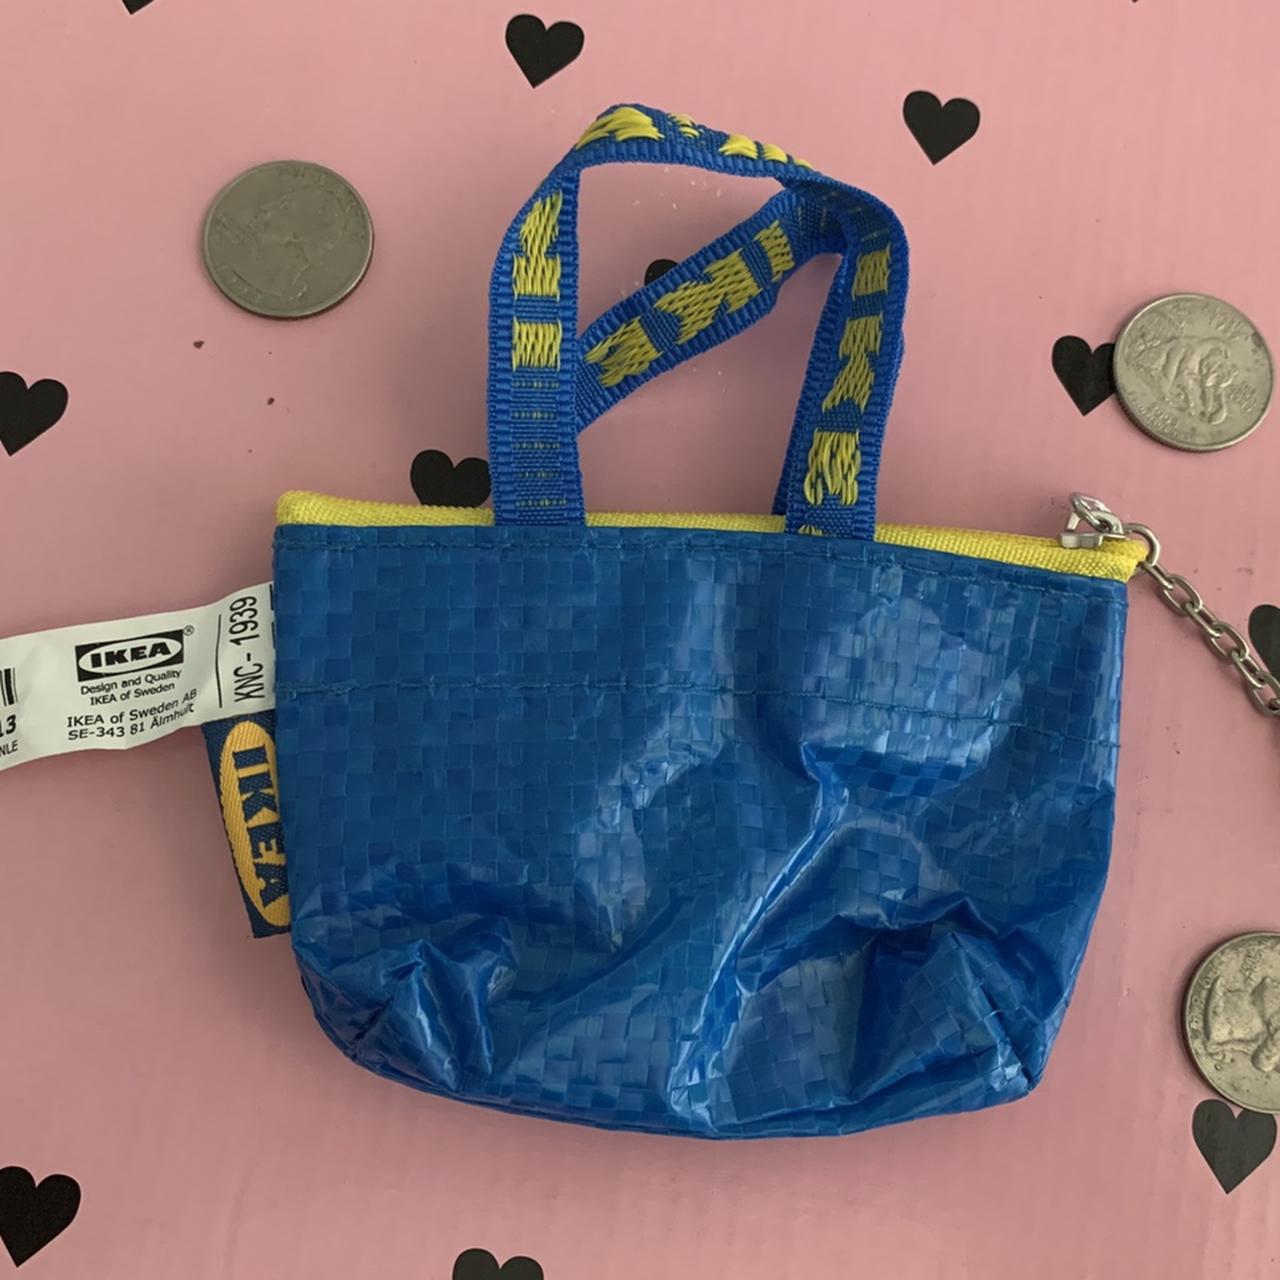  IKEA Key & Coin Purse KNOLIG Bag Small Blue with One